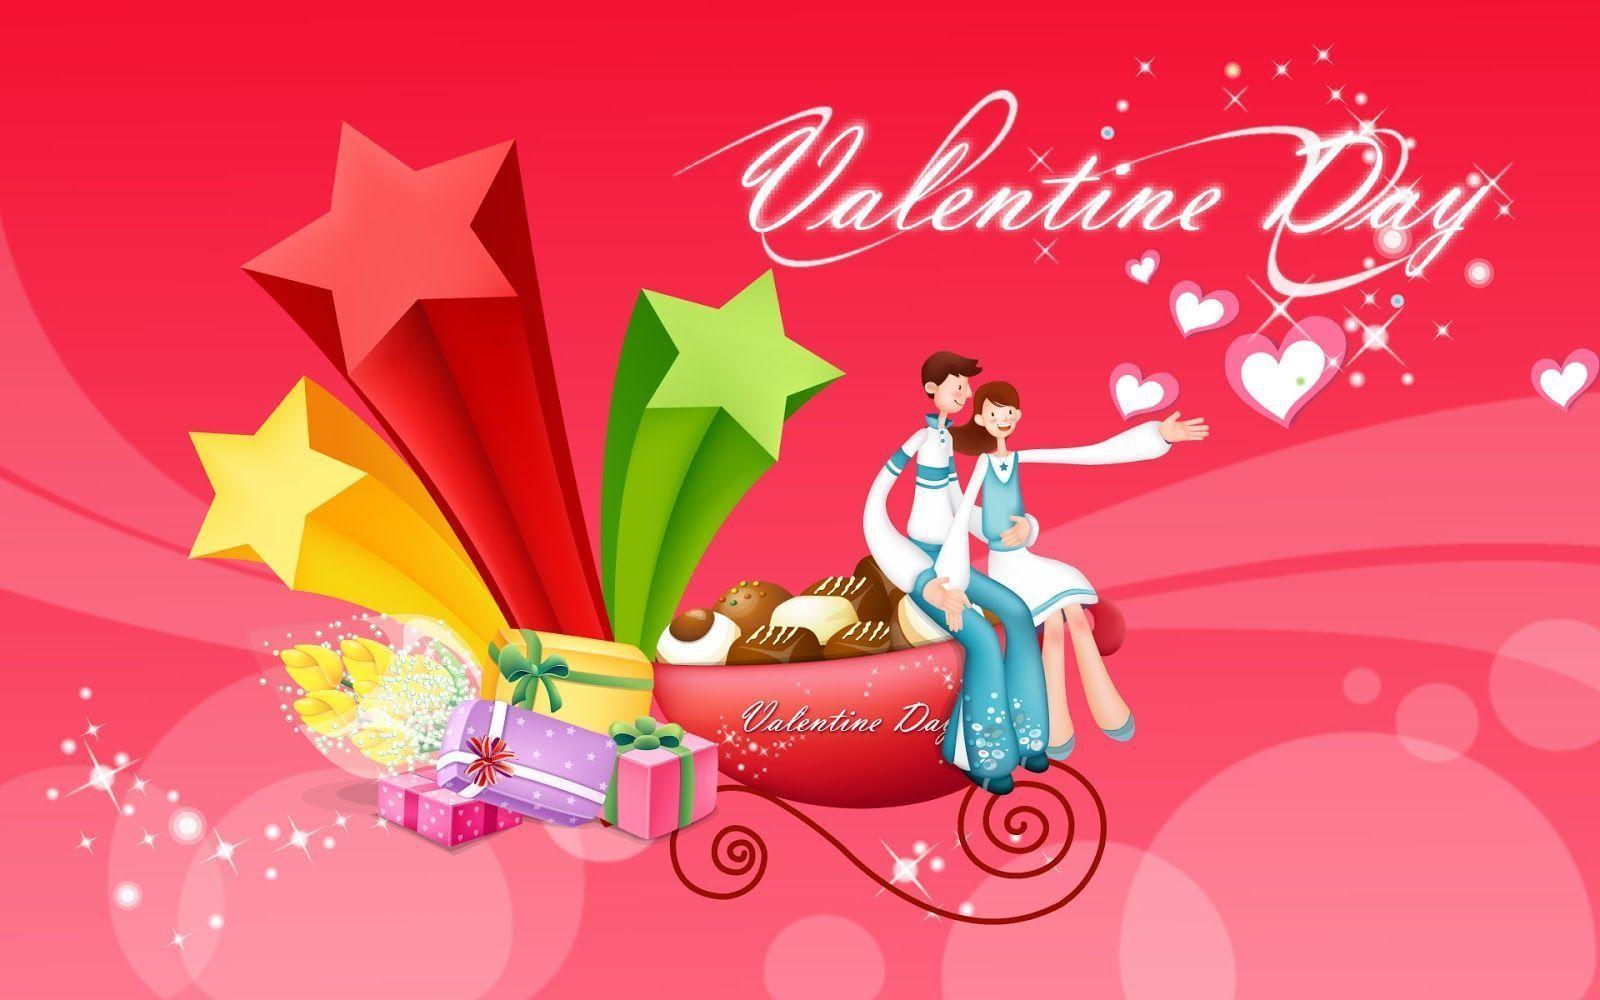 Happy Valentines Day 2015 HD Wallpaper